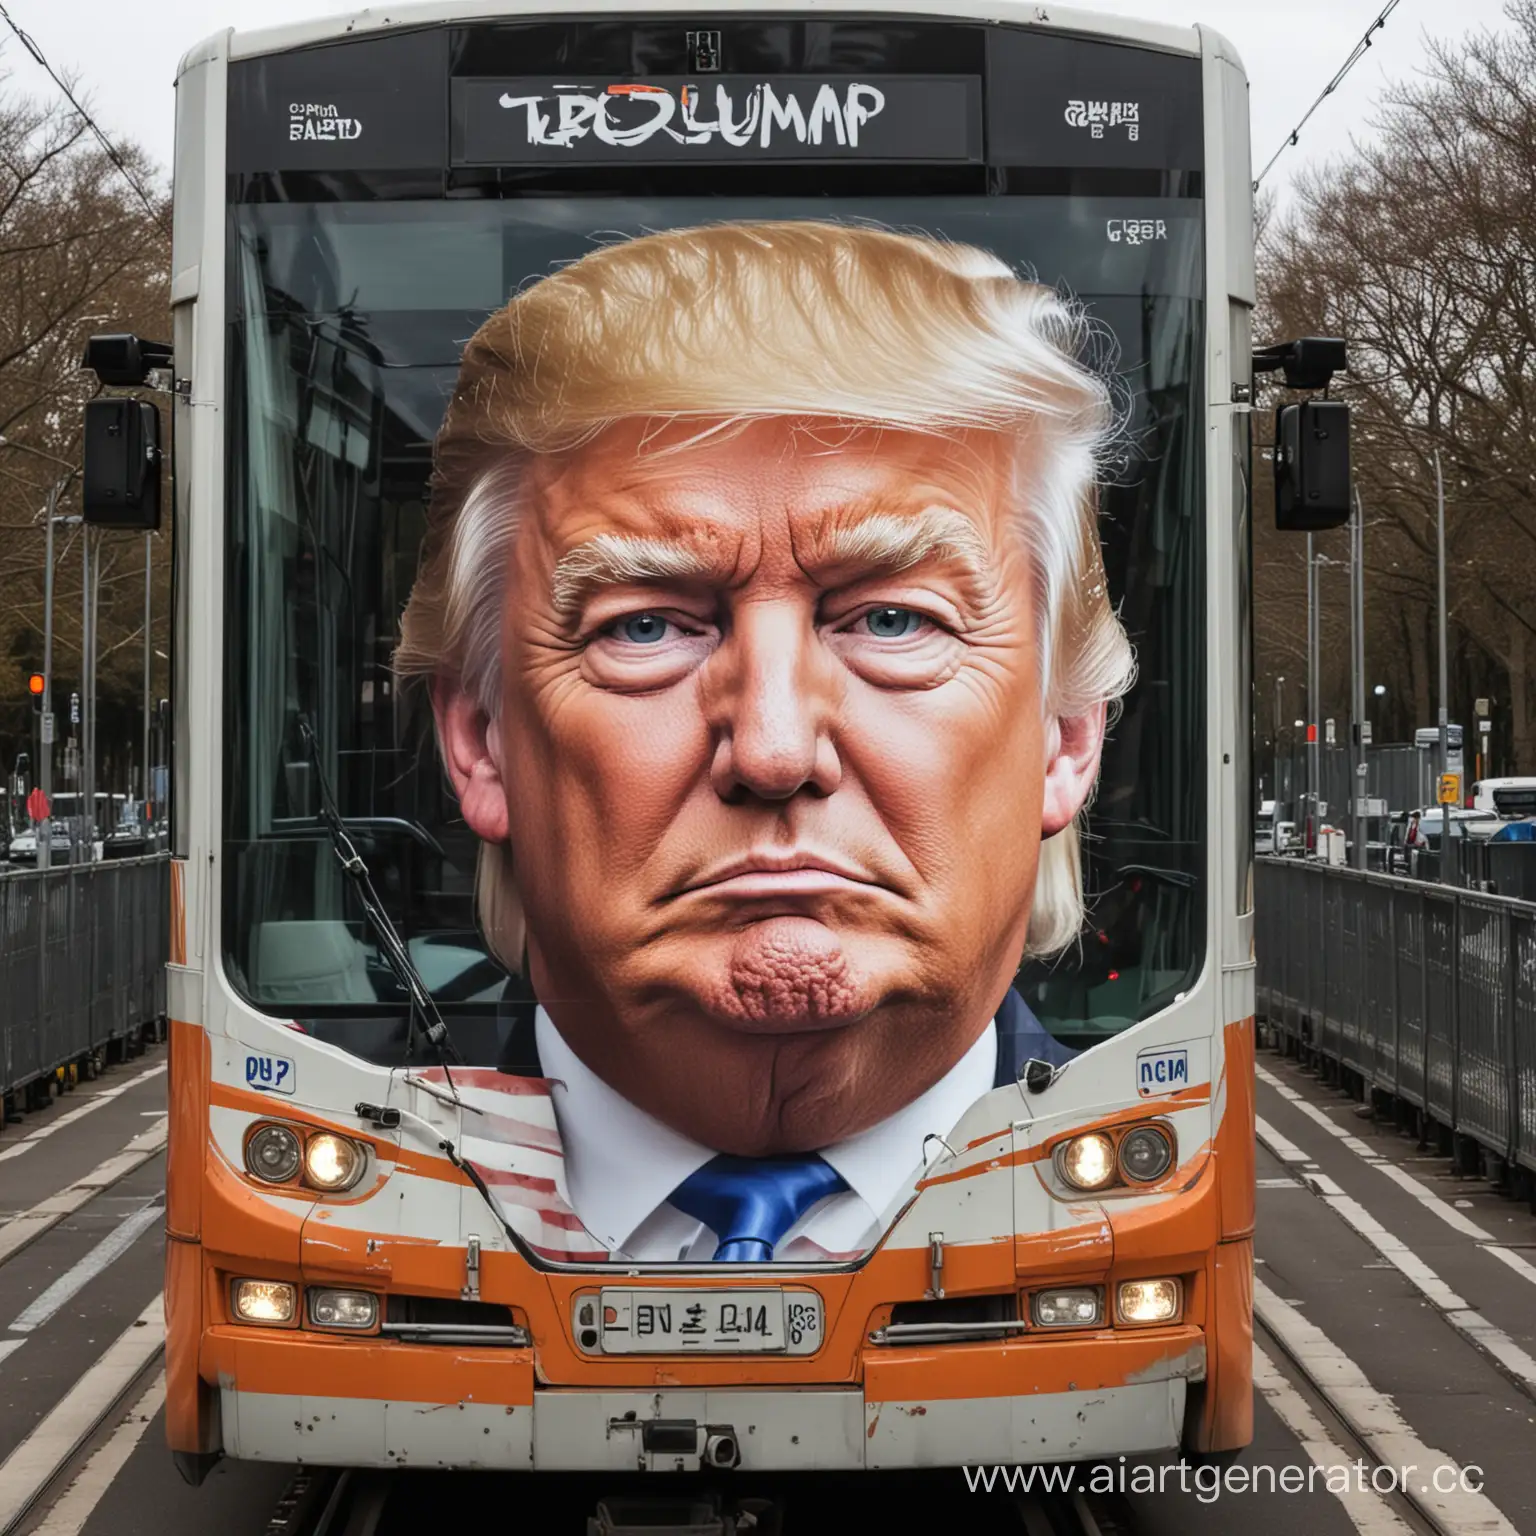 Tram-Caricature-Featuring-the-Face-of-Donald-Trump